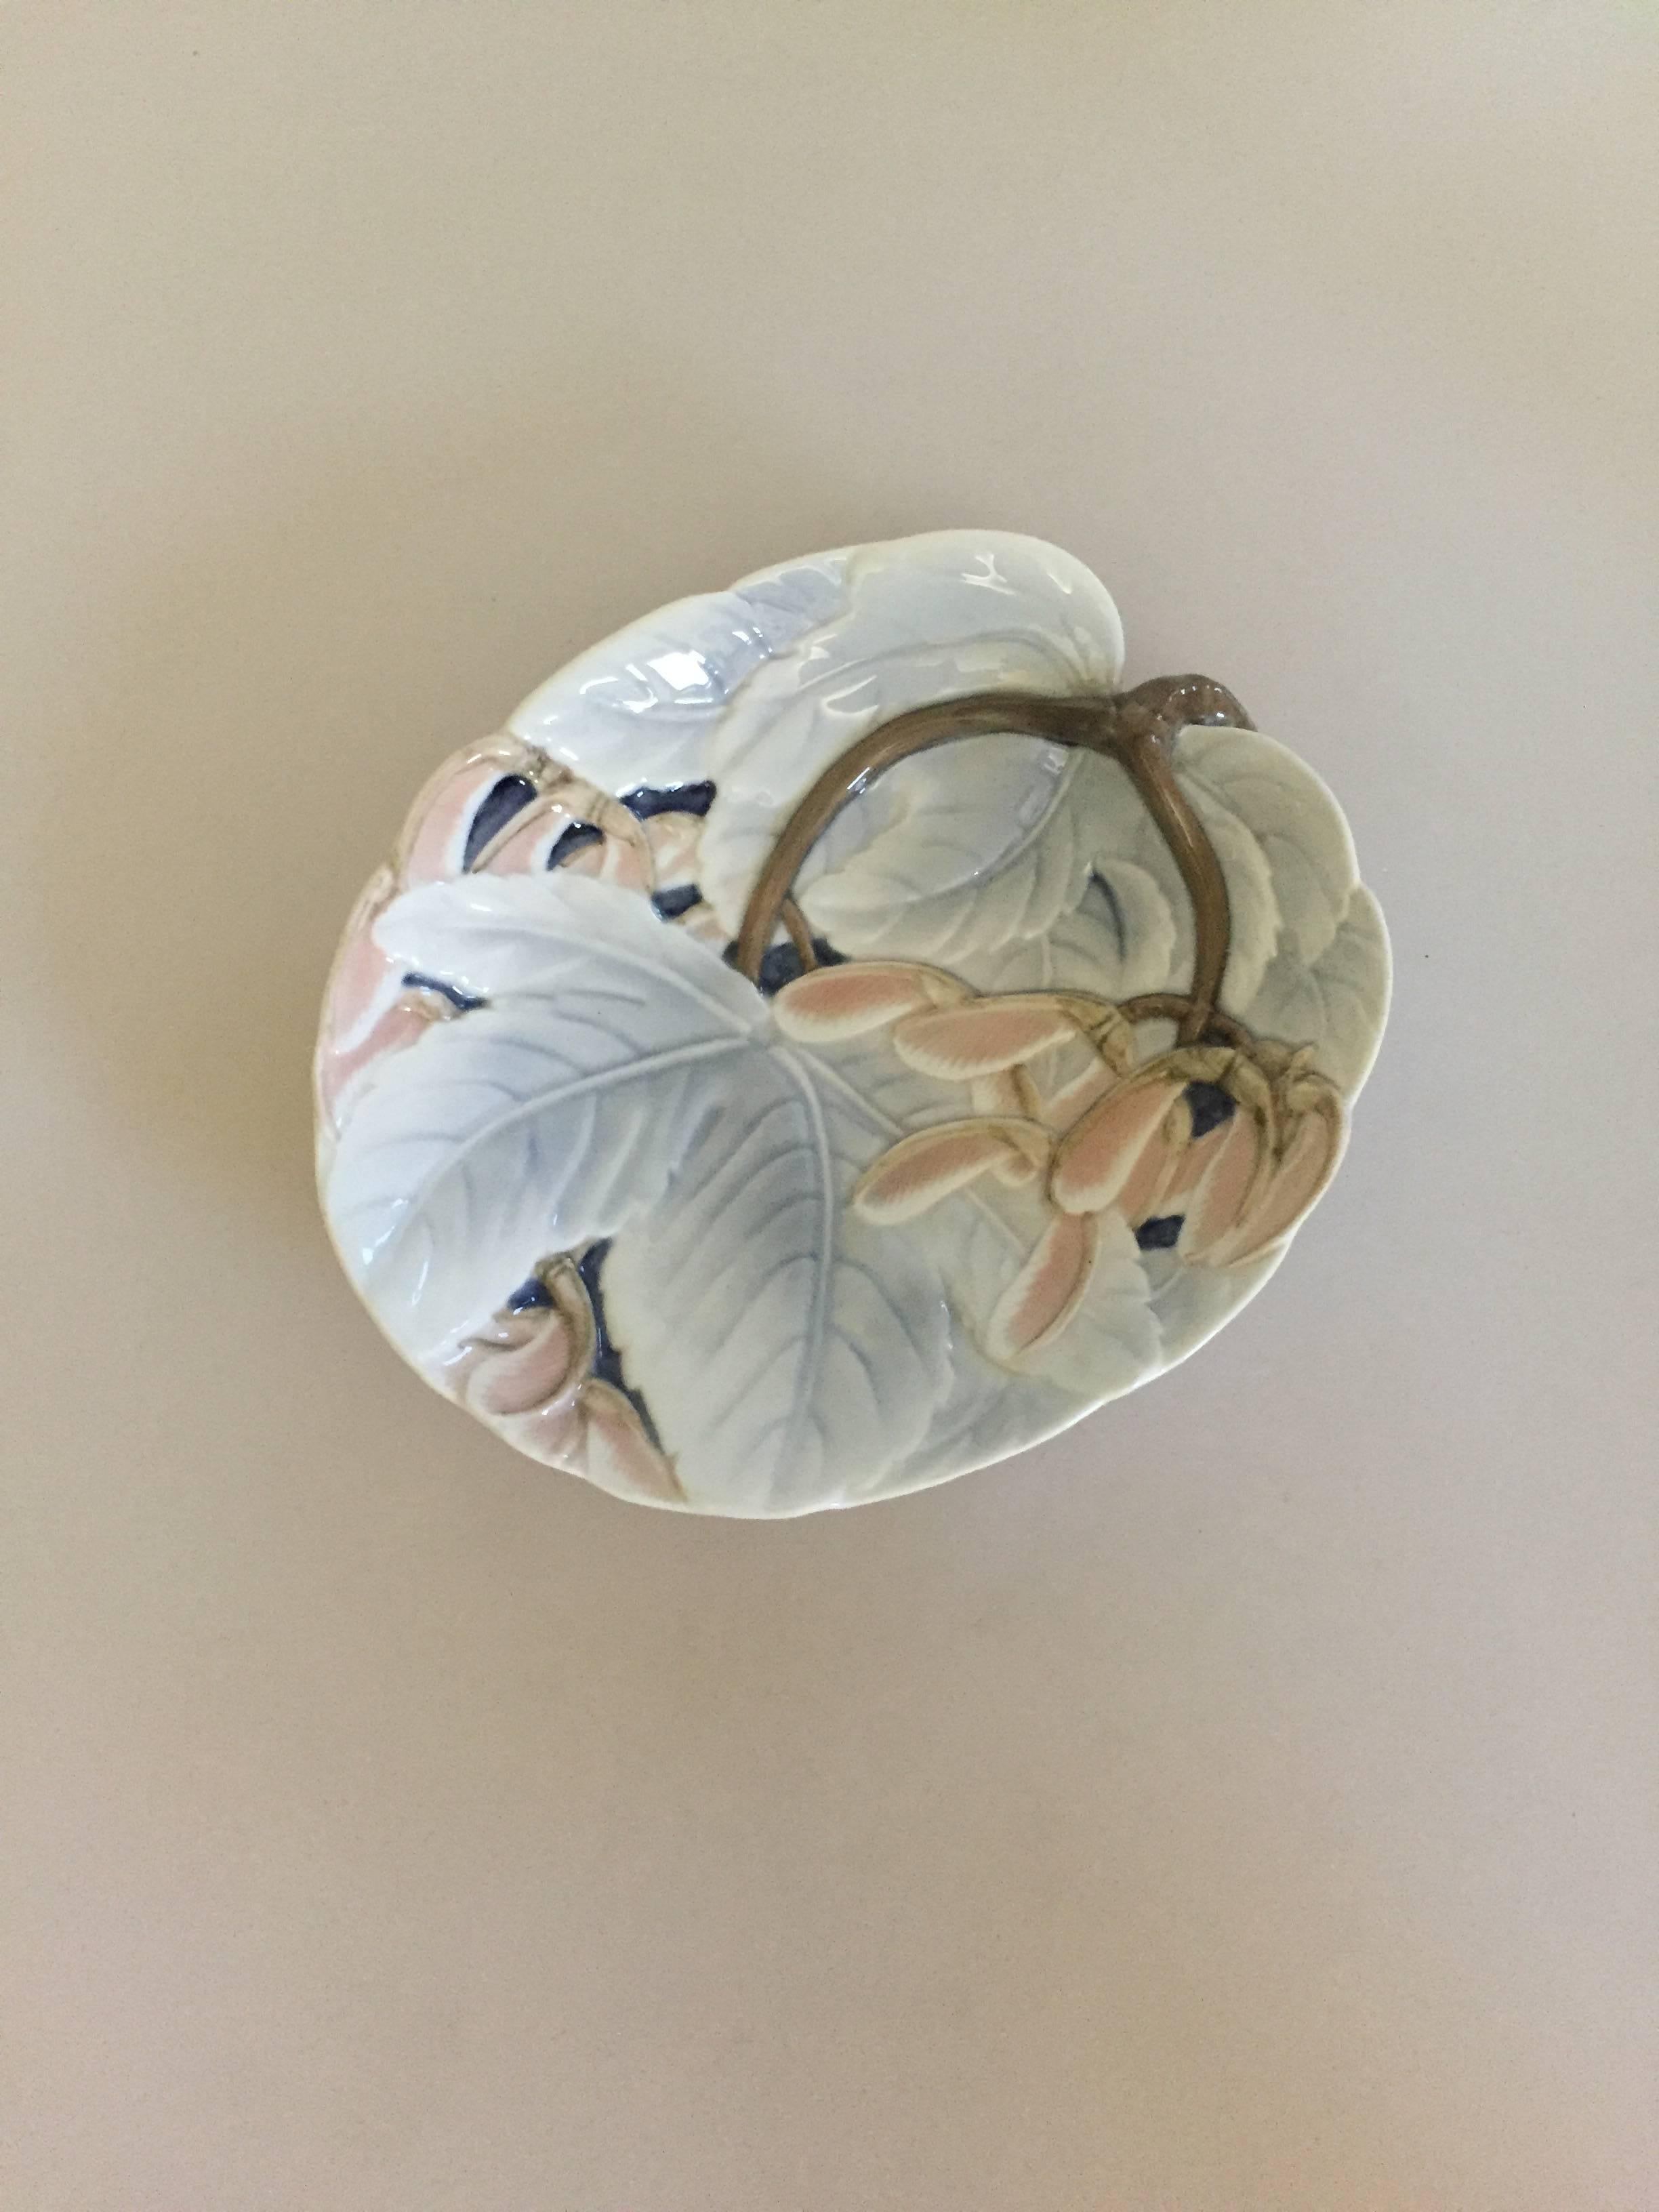 Bing & Grondahl leaf-shaped bowl or ashtray #1113. Designed by Effie Hegermann-Lindencrone.

Measures: 16.5 x 18.5 cm.